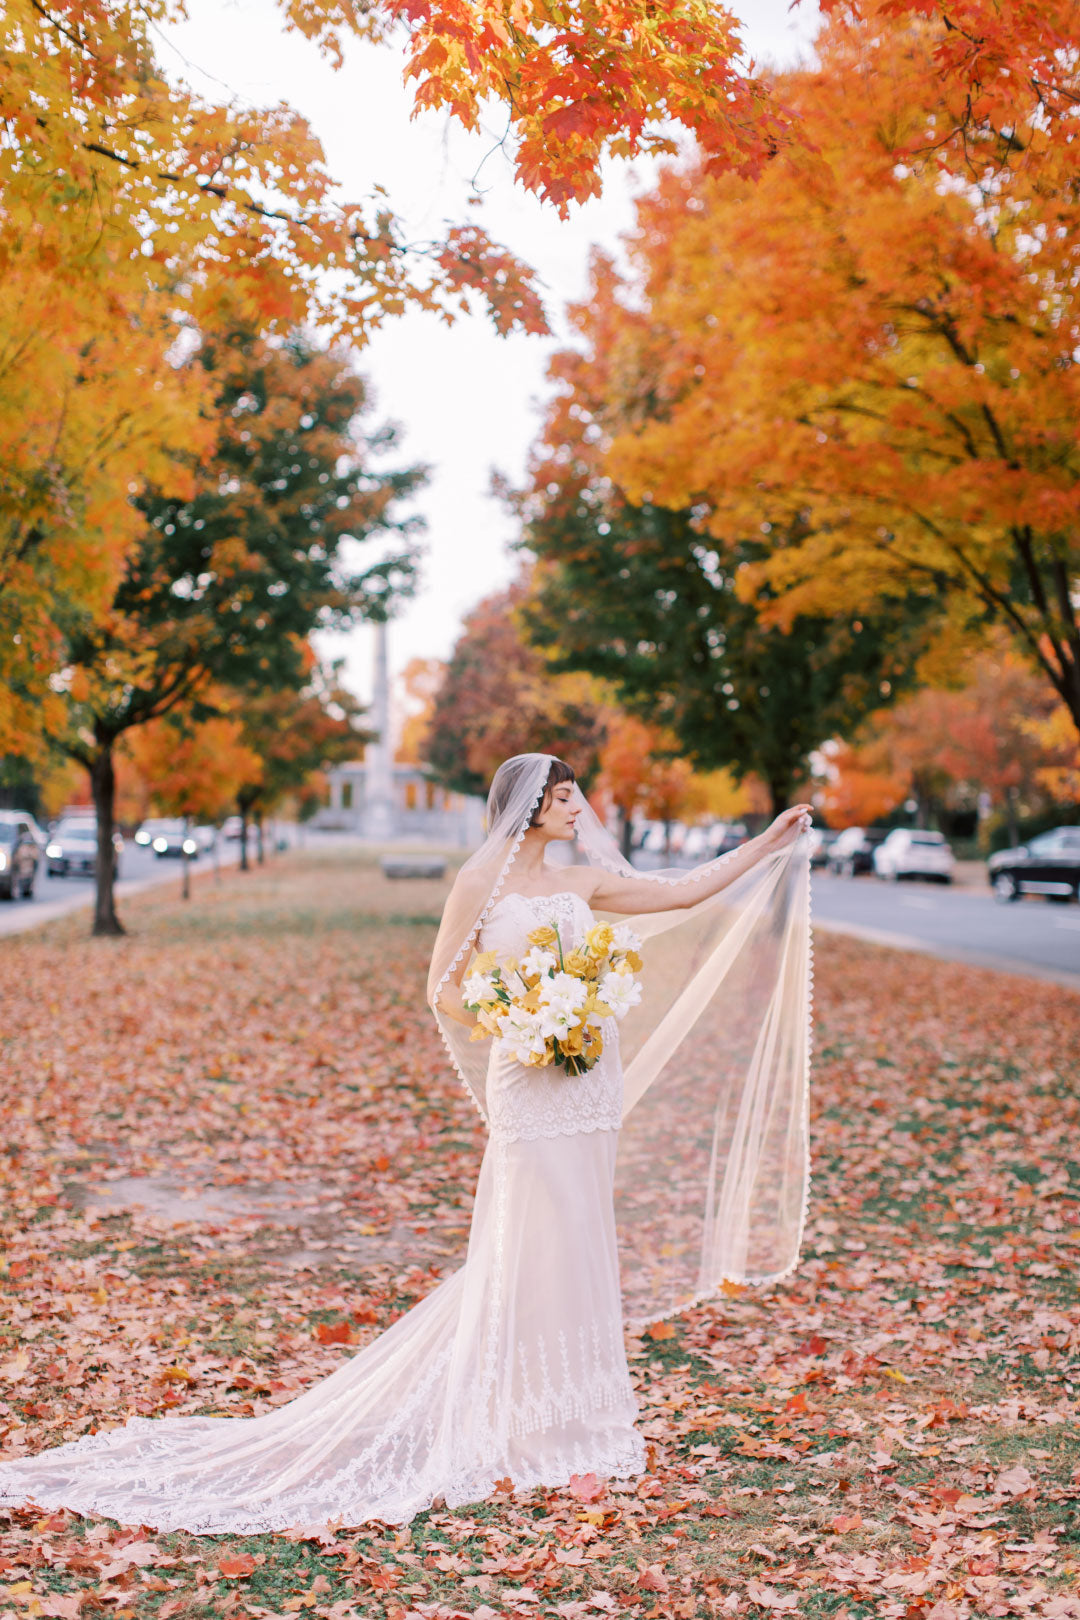 Bride in Wedding Dress in Fall setting 